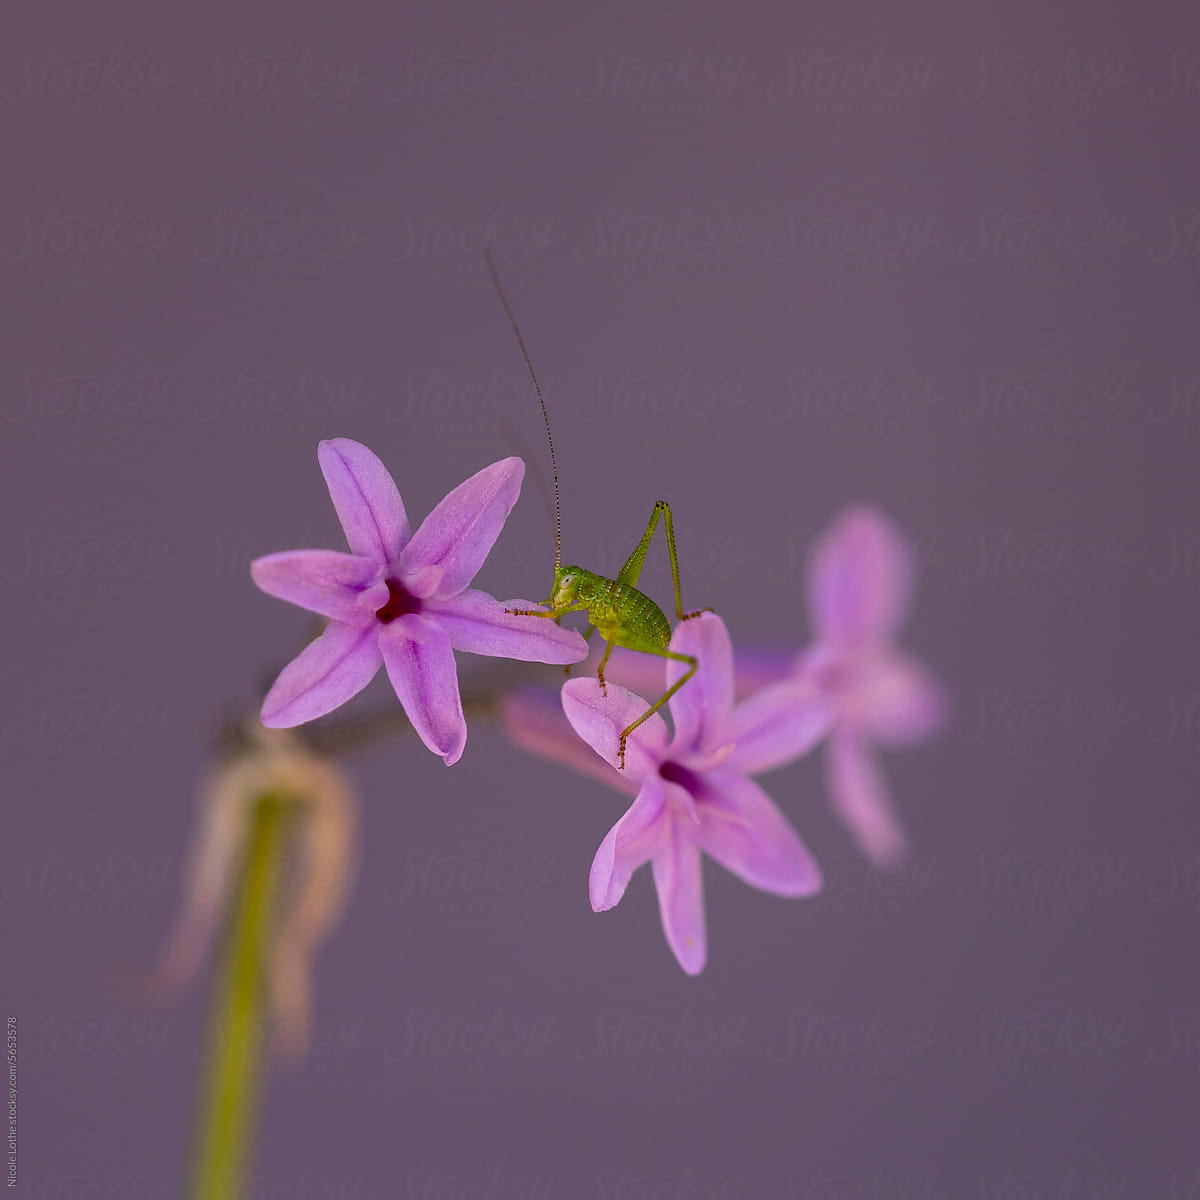 Grasshopper on pink flowers eating petal